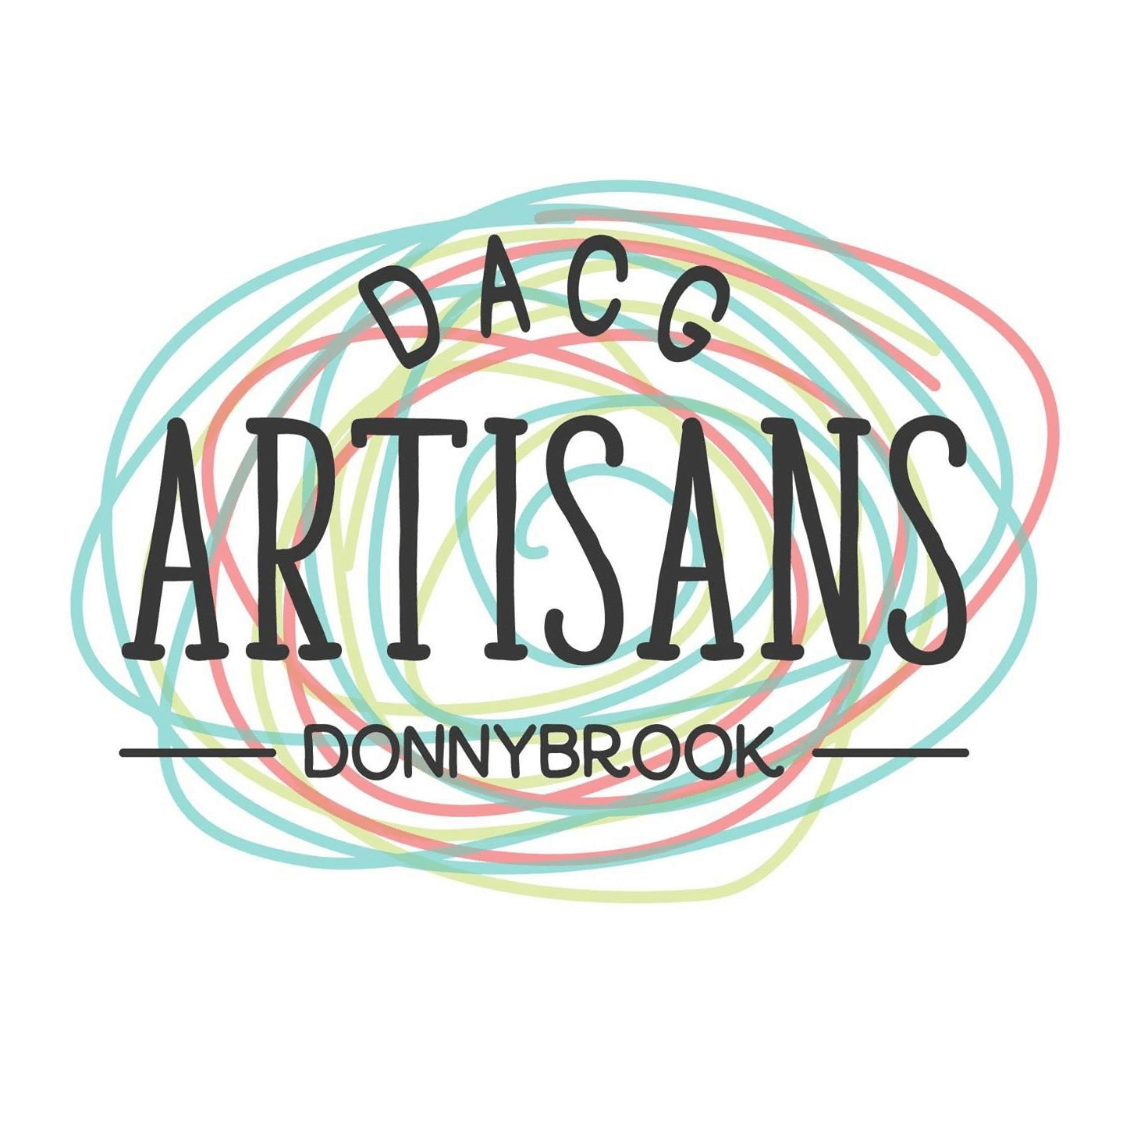 Shop Local donnybrook Artisans